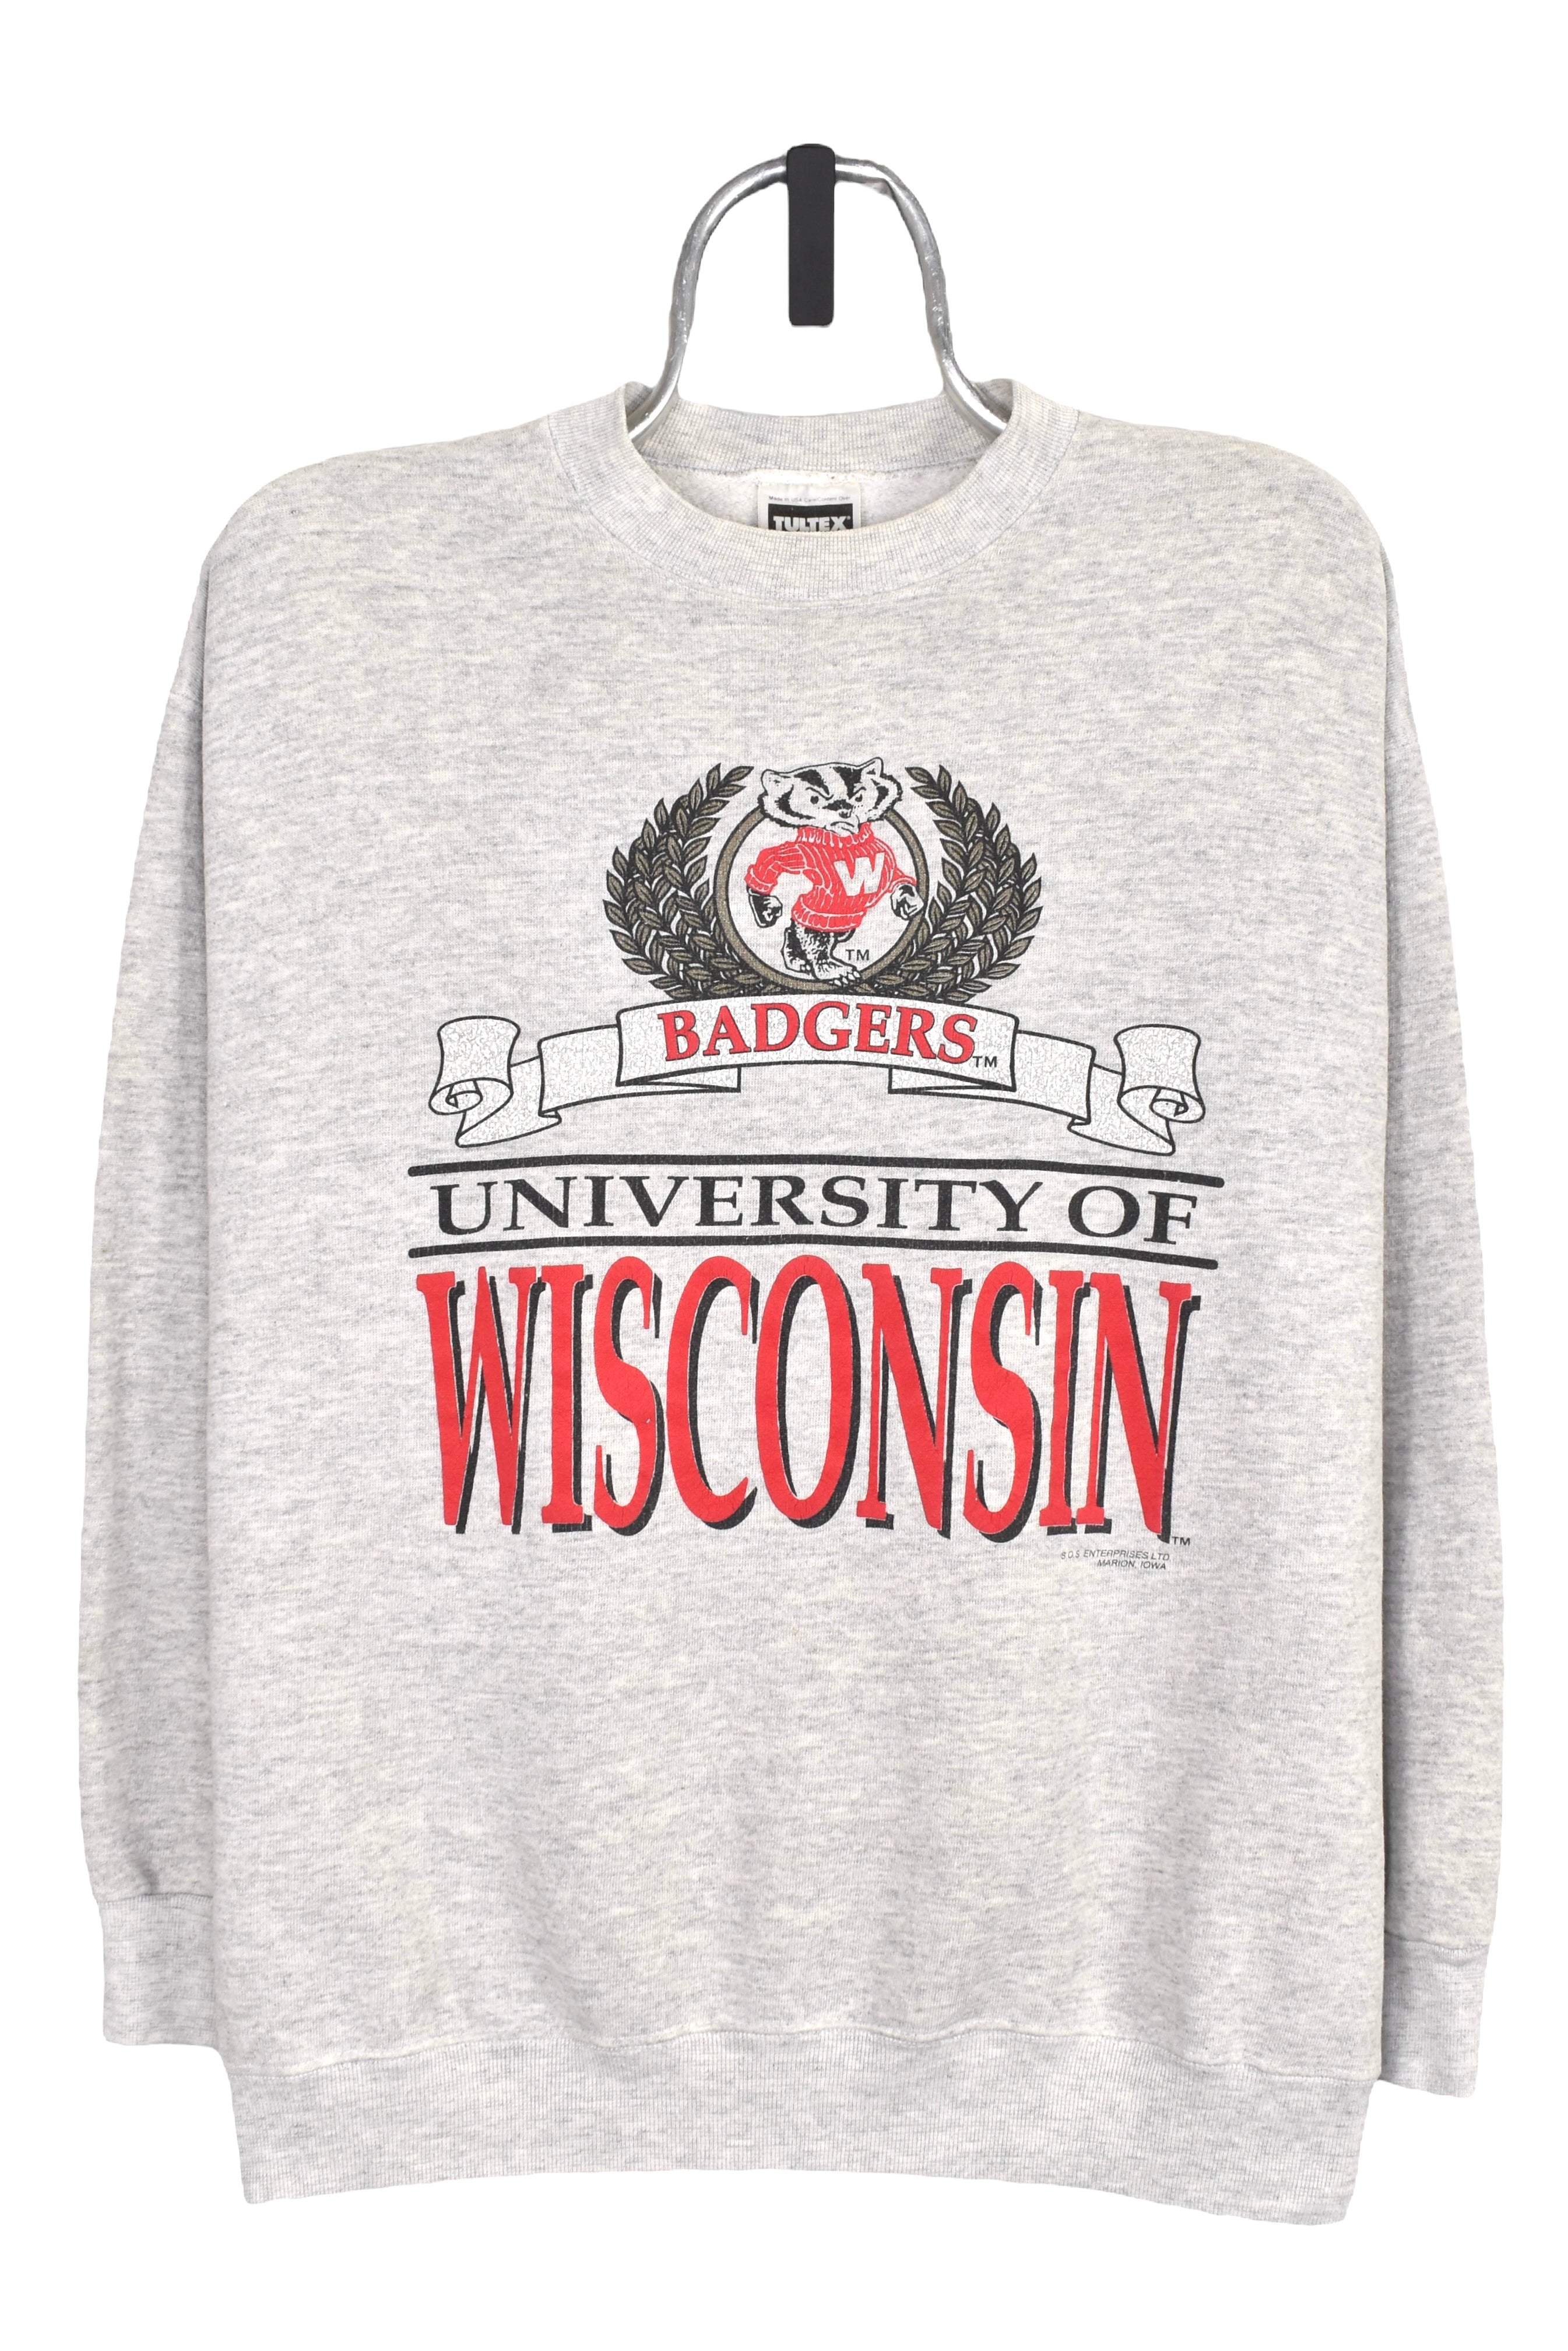 Vintage University of Wisconsin sweatshirt (L), grey graphic crewneck